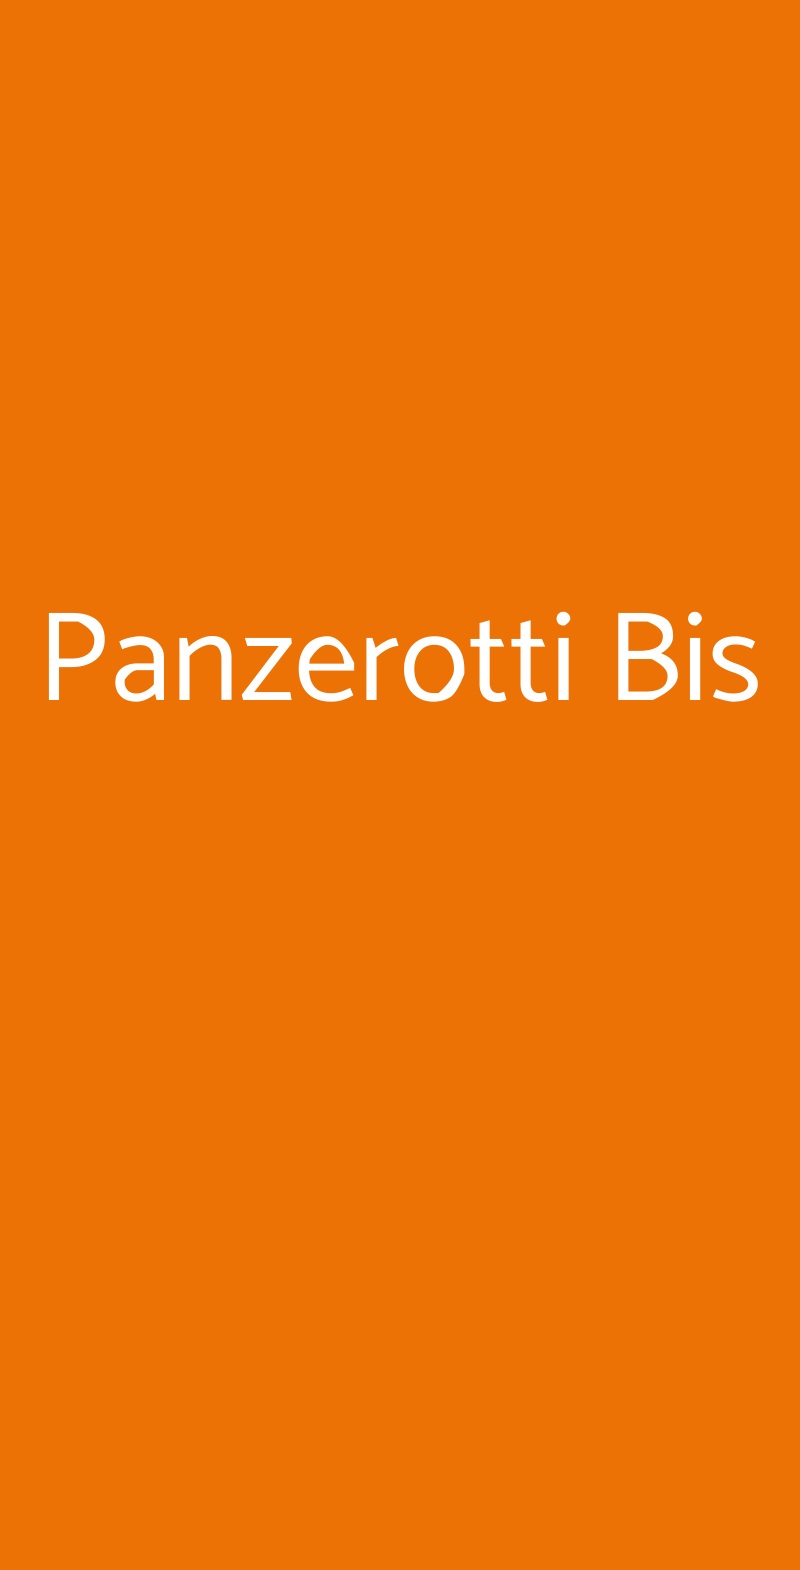 Panzerotti Bis Milano menù 1 pagina